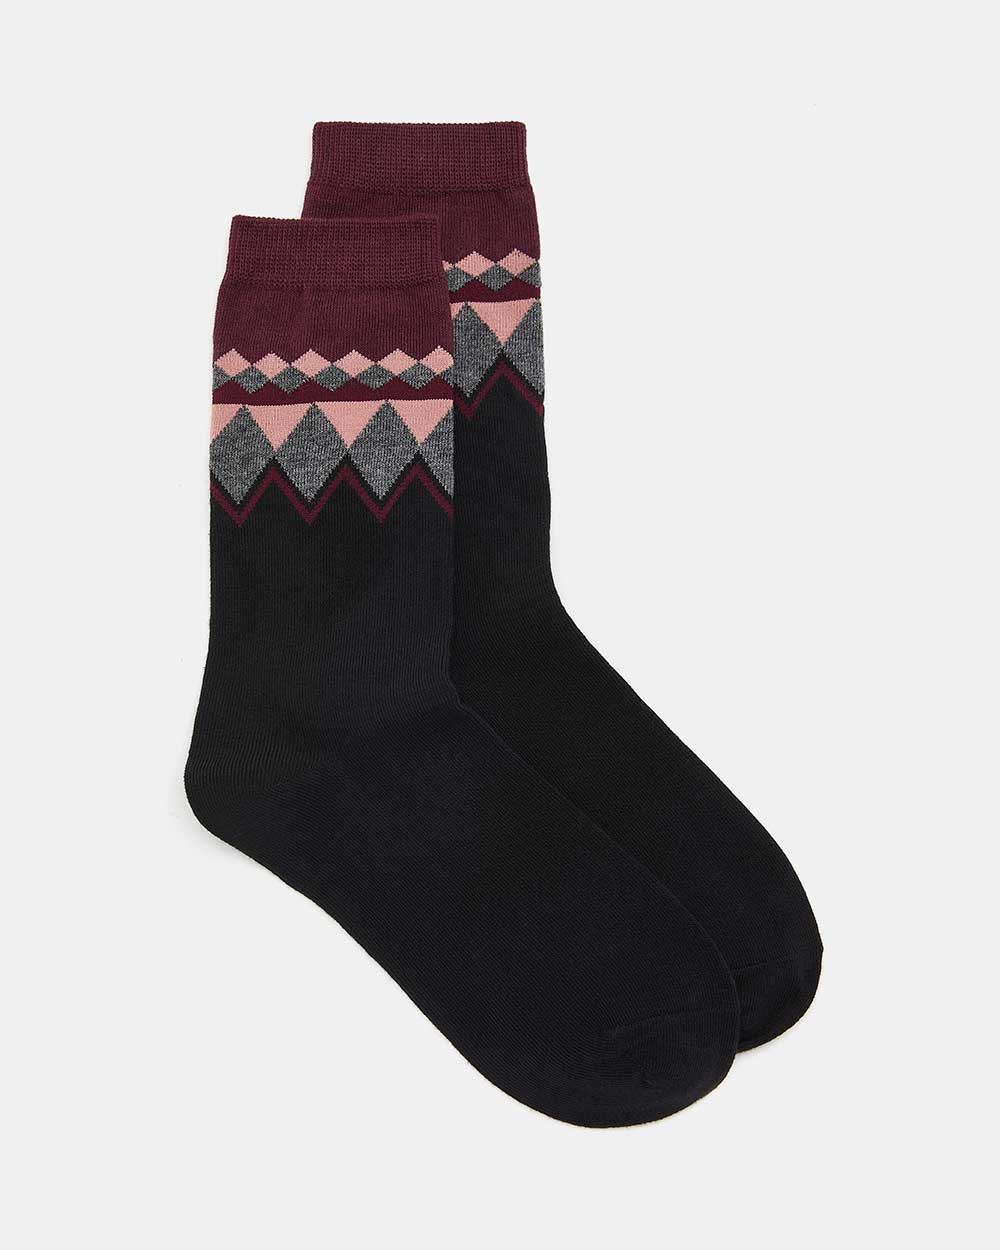 Black Triangular Patterned Socks